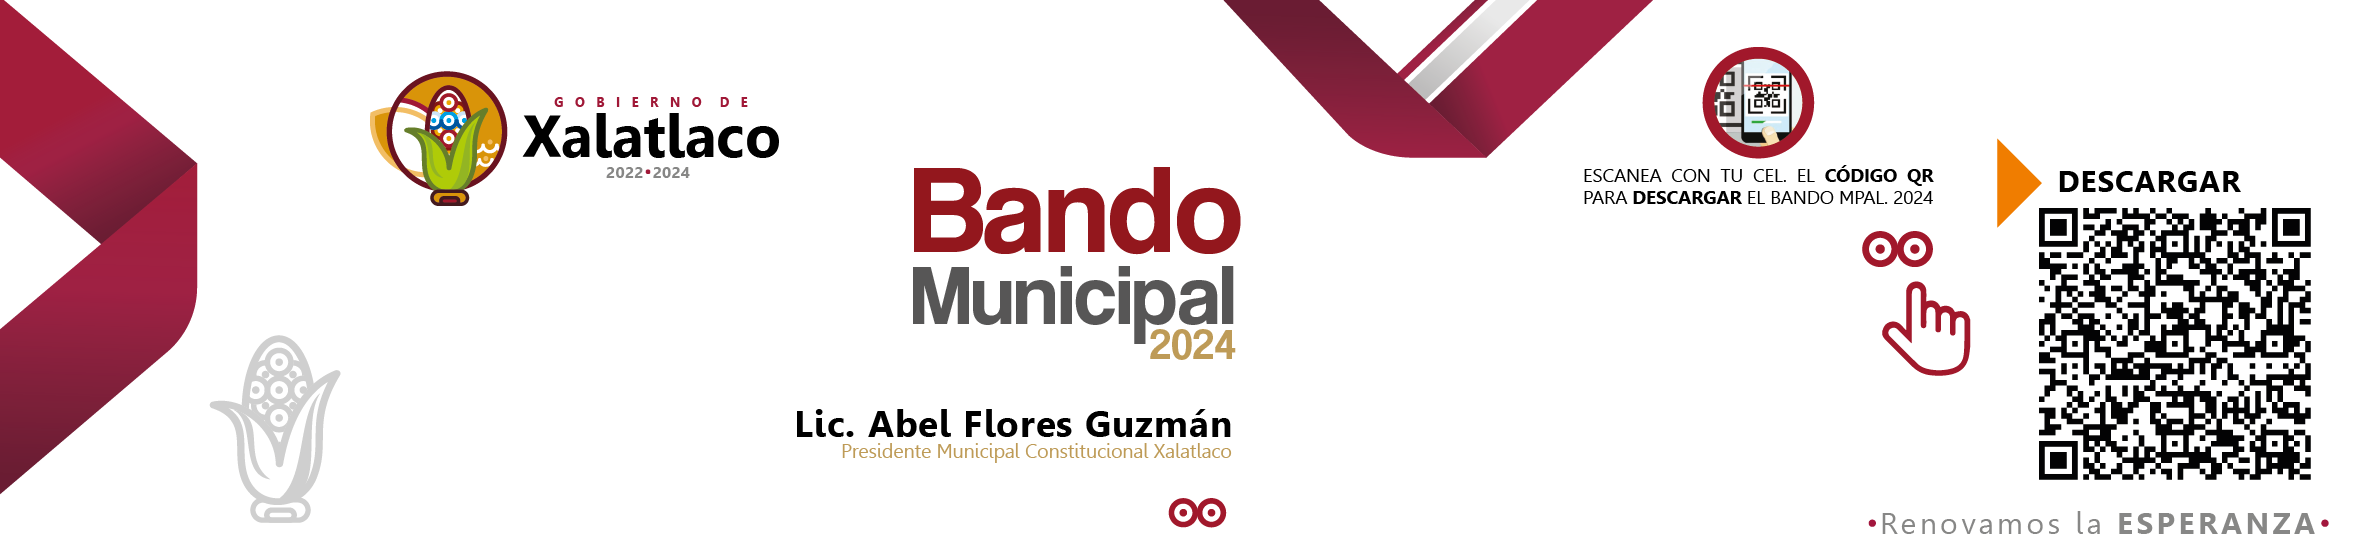 Bando Municipal 2024